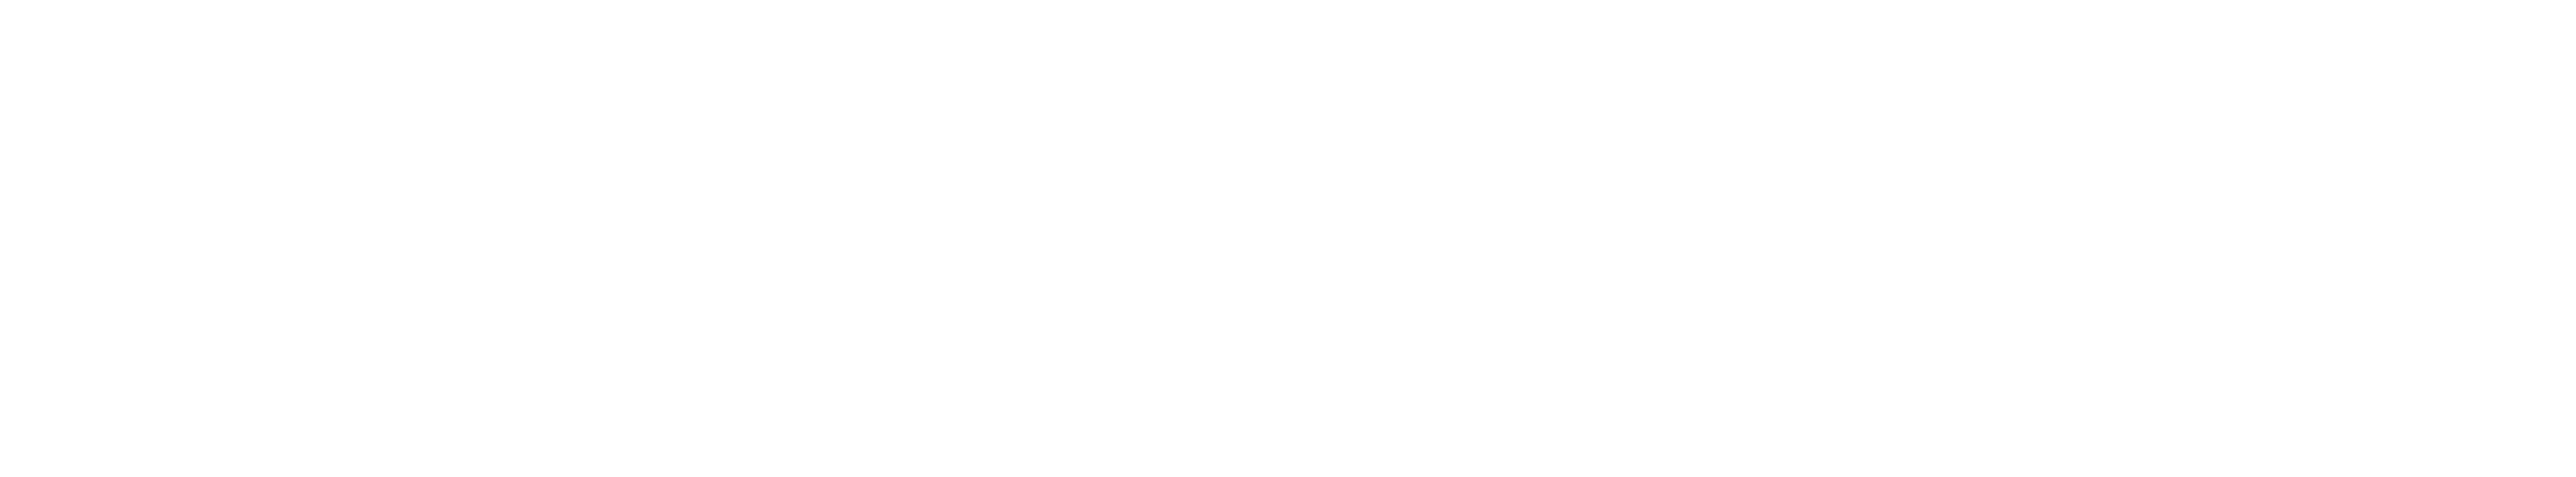 The Mitsubishi Eclipse Cross PHEV logo in white